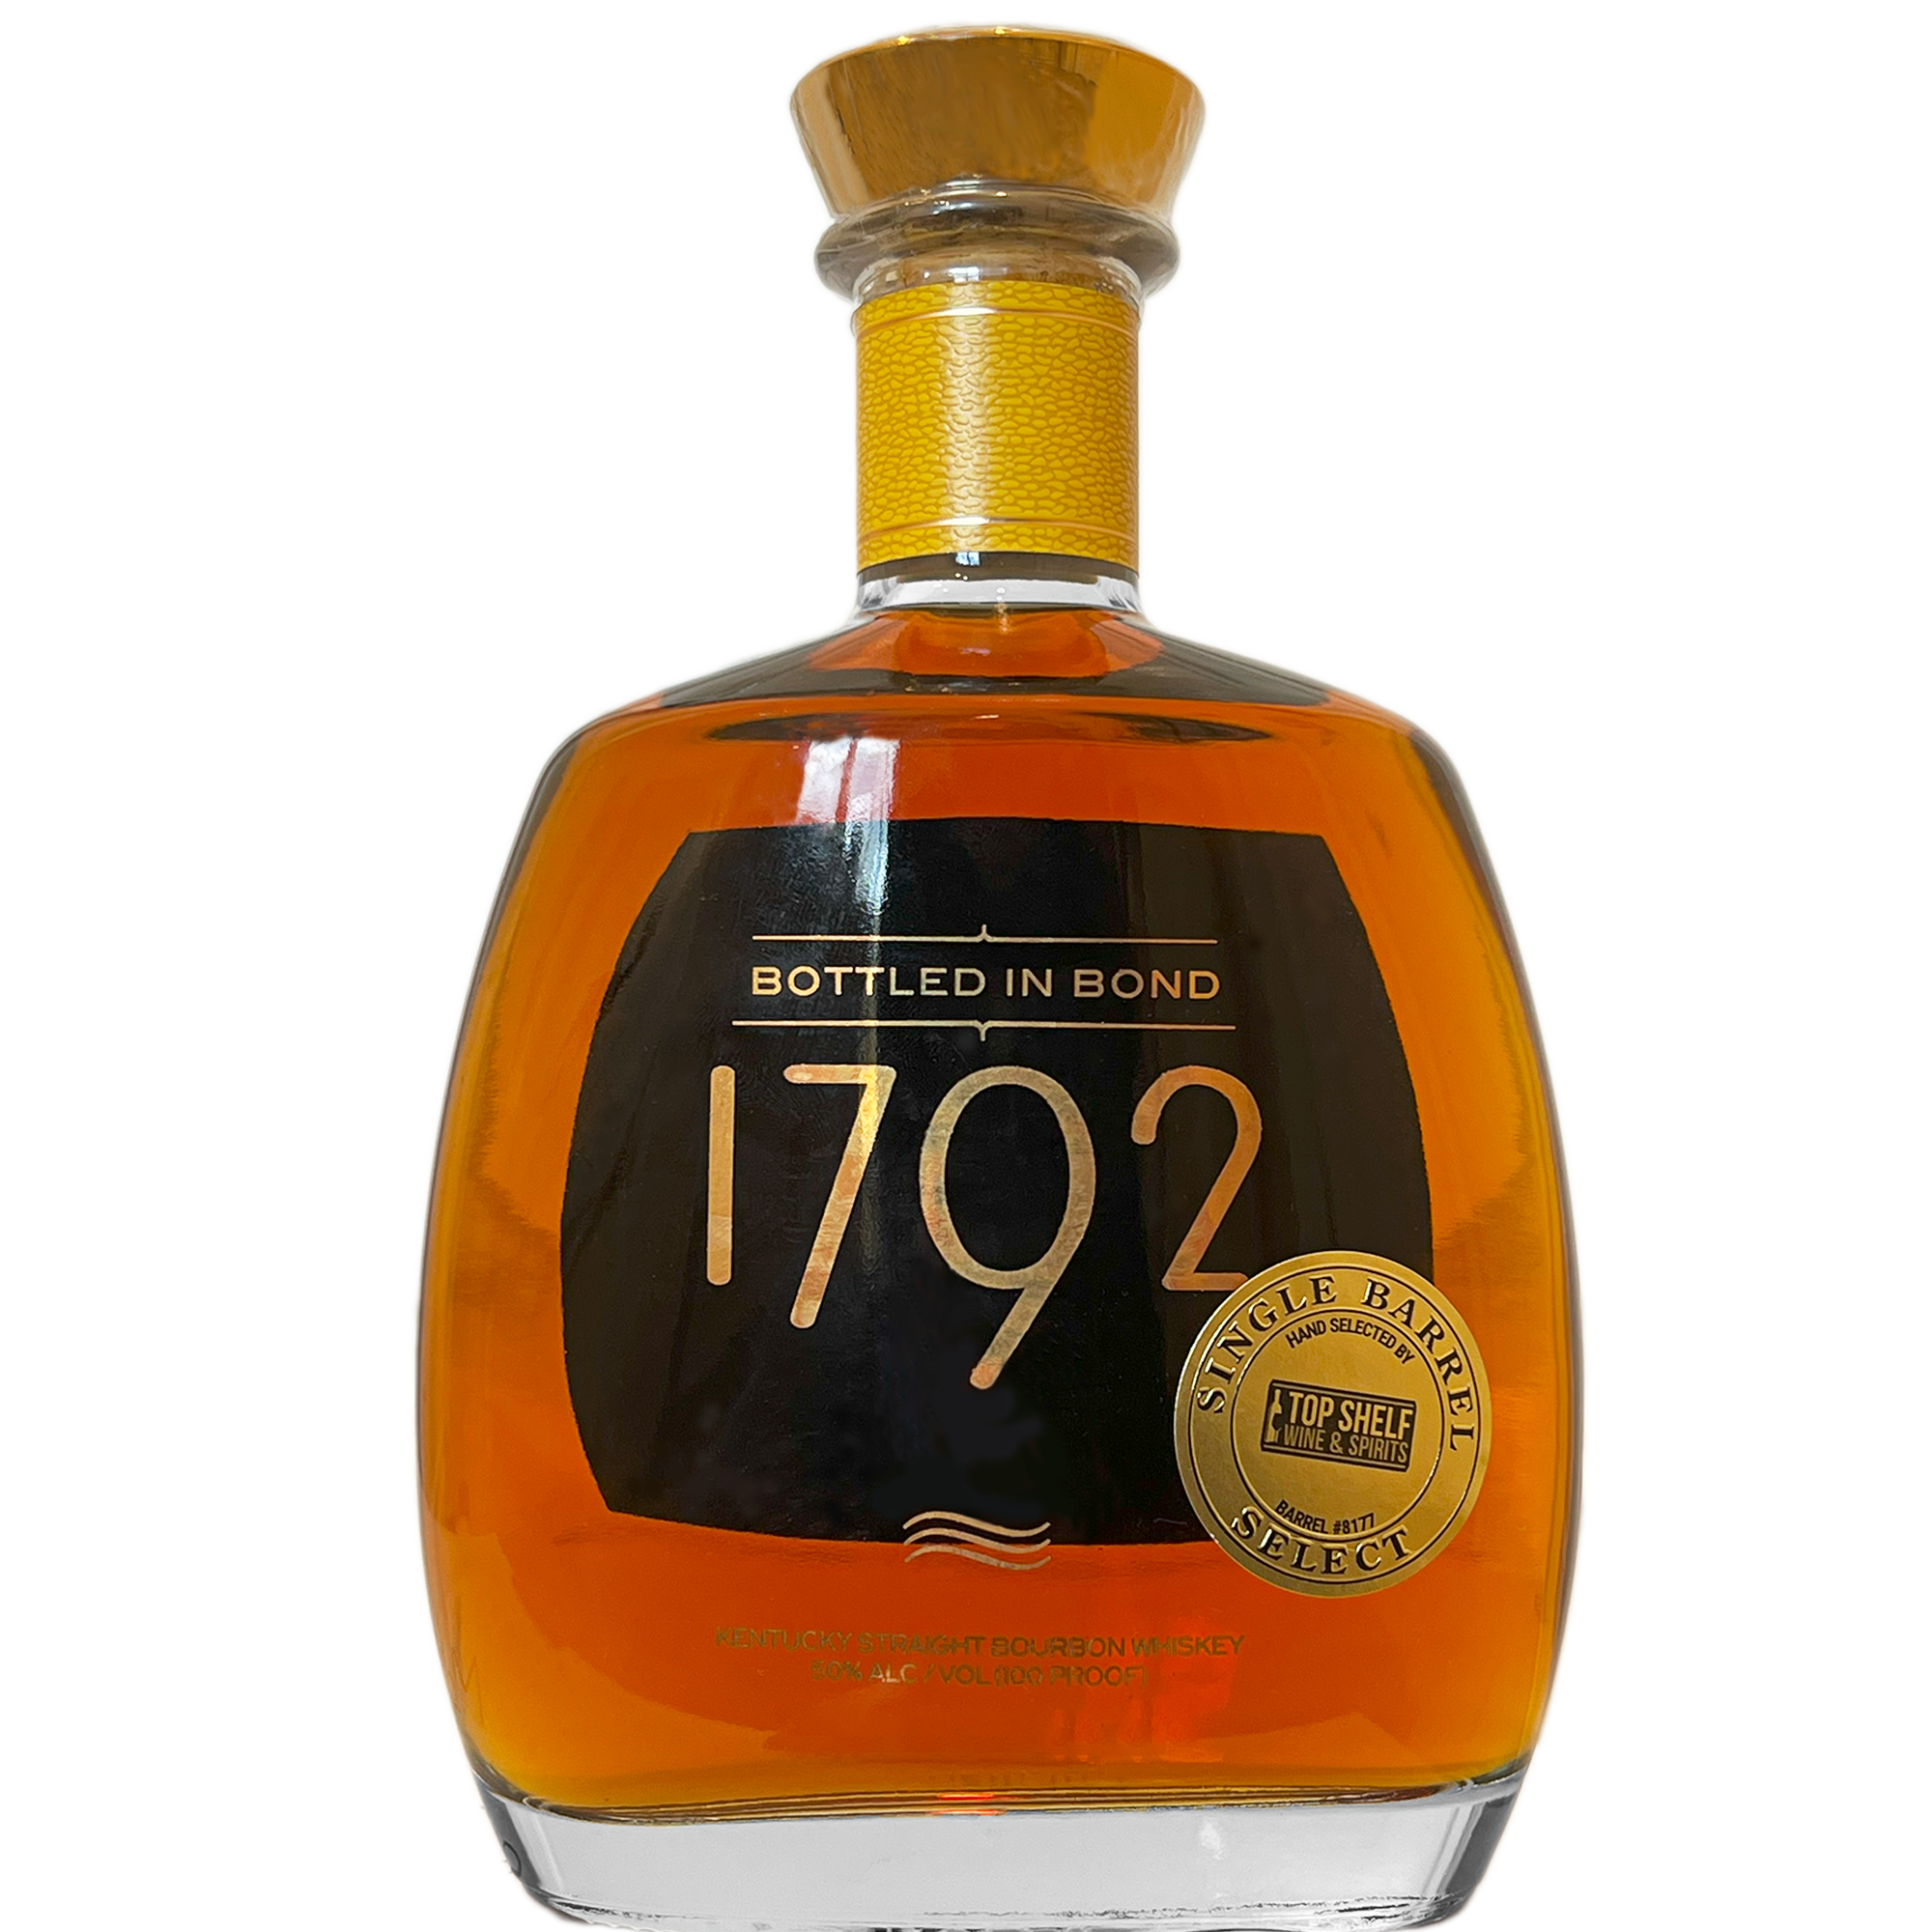 1792 Bottled in Bond Single Barrel (Private Select)